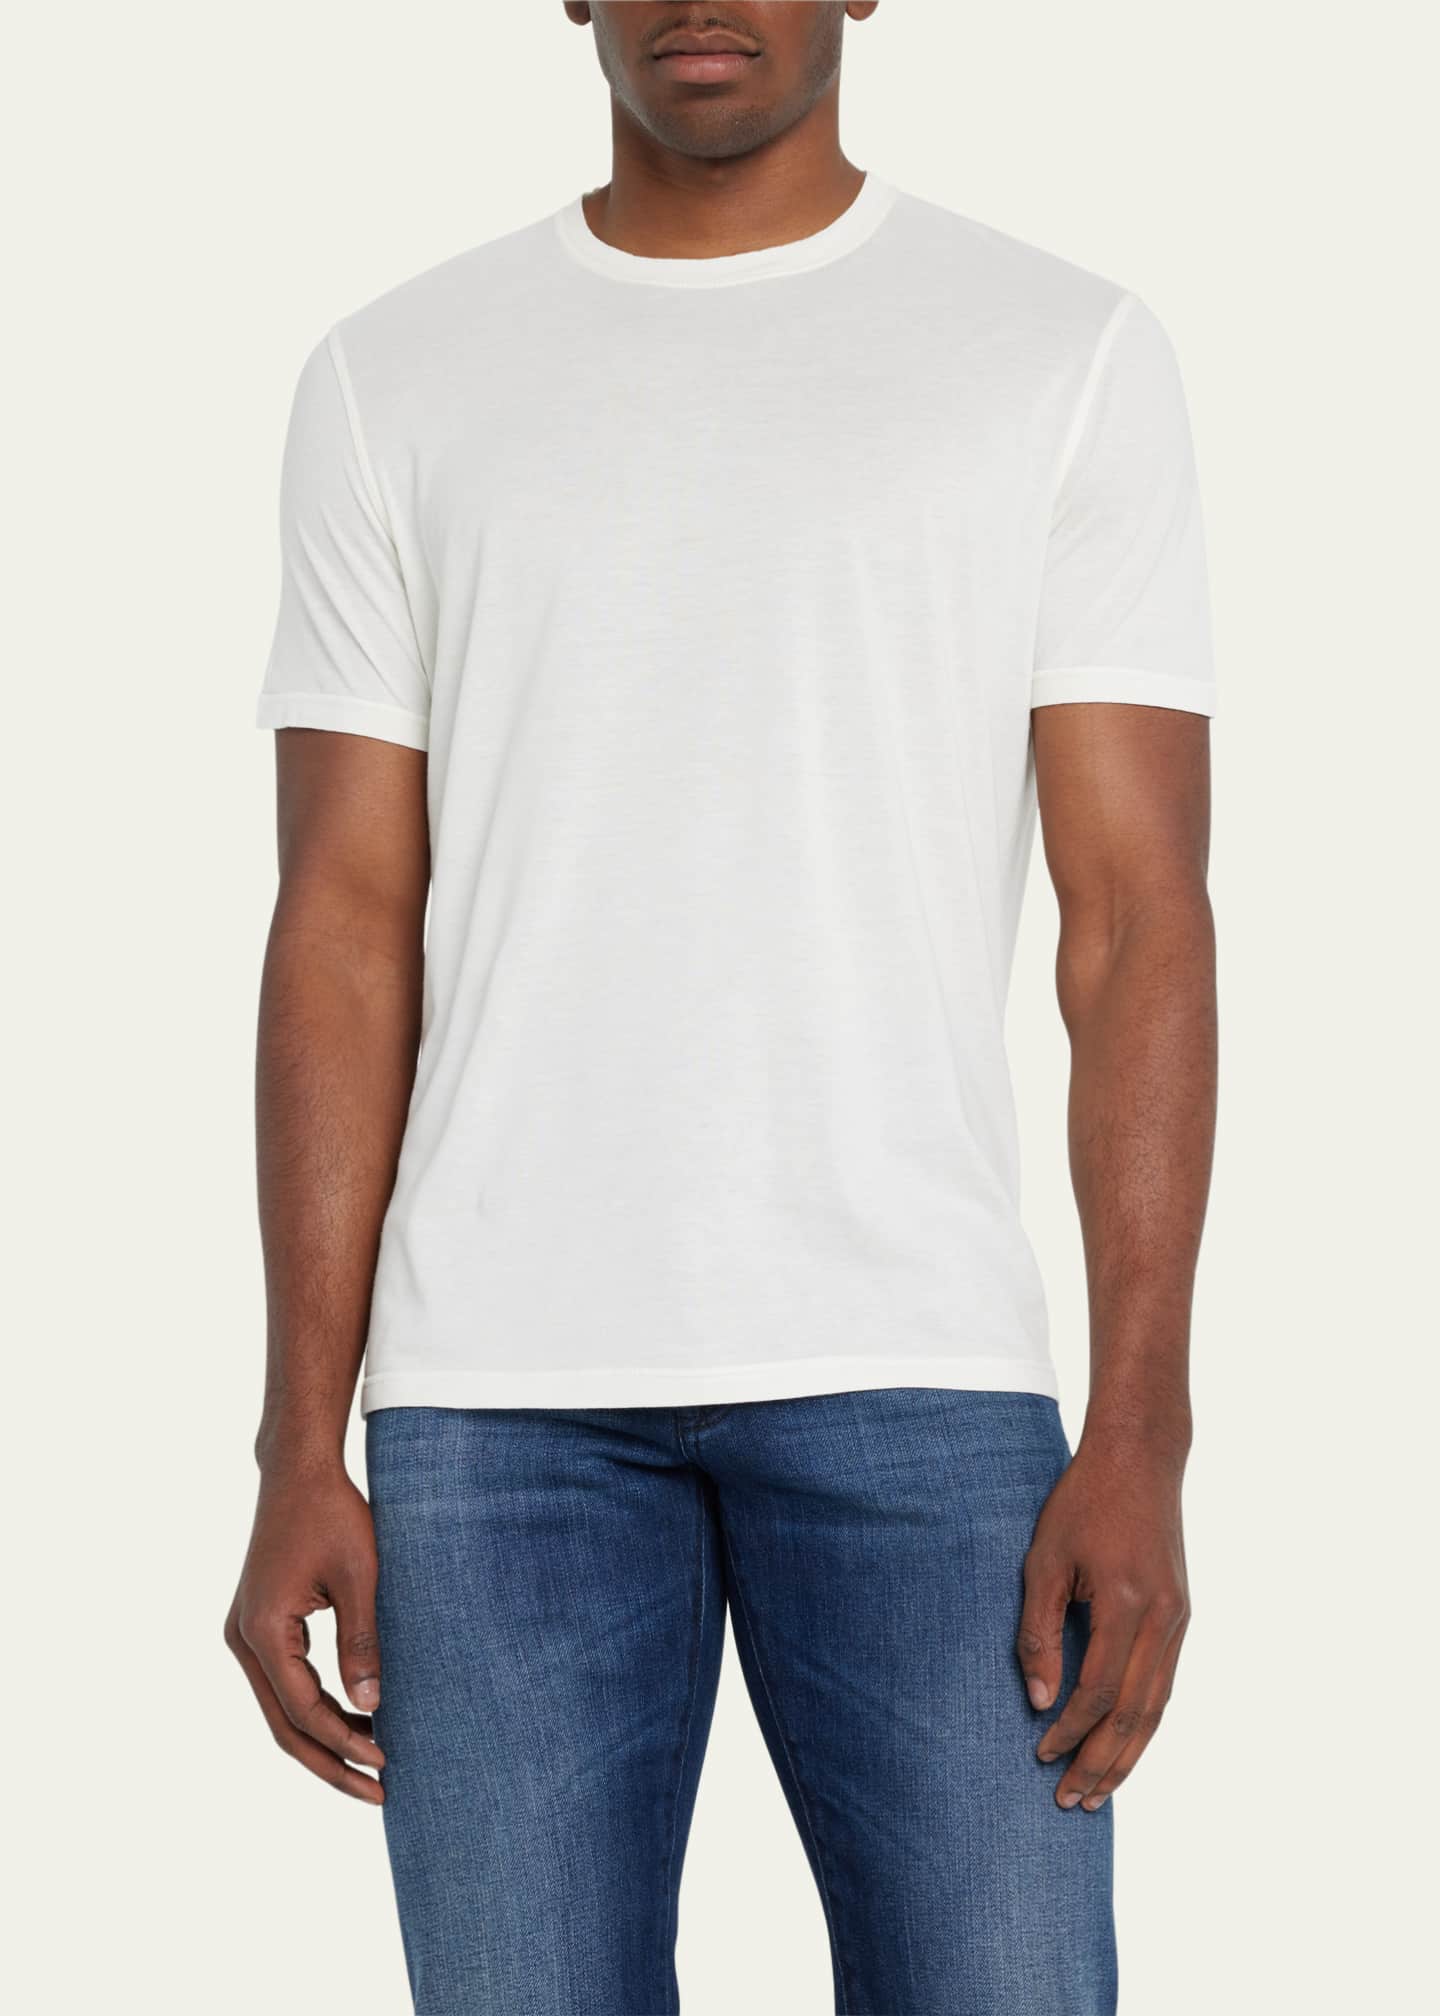 Kiton Men's Cotton-Cashmere Crewneck T-Shirt - Bergdorf Goodman